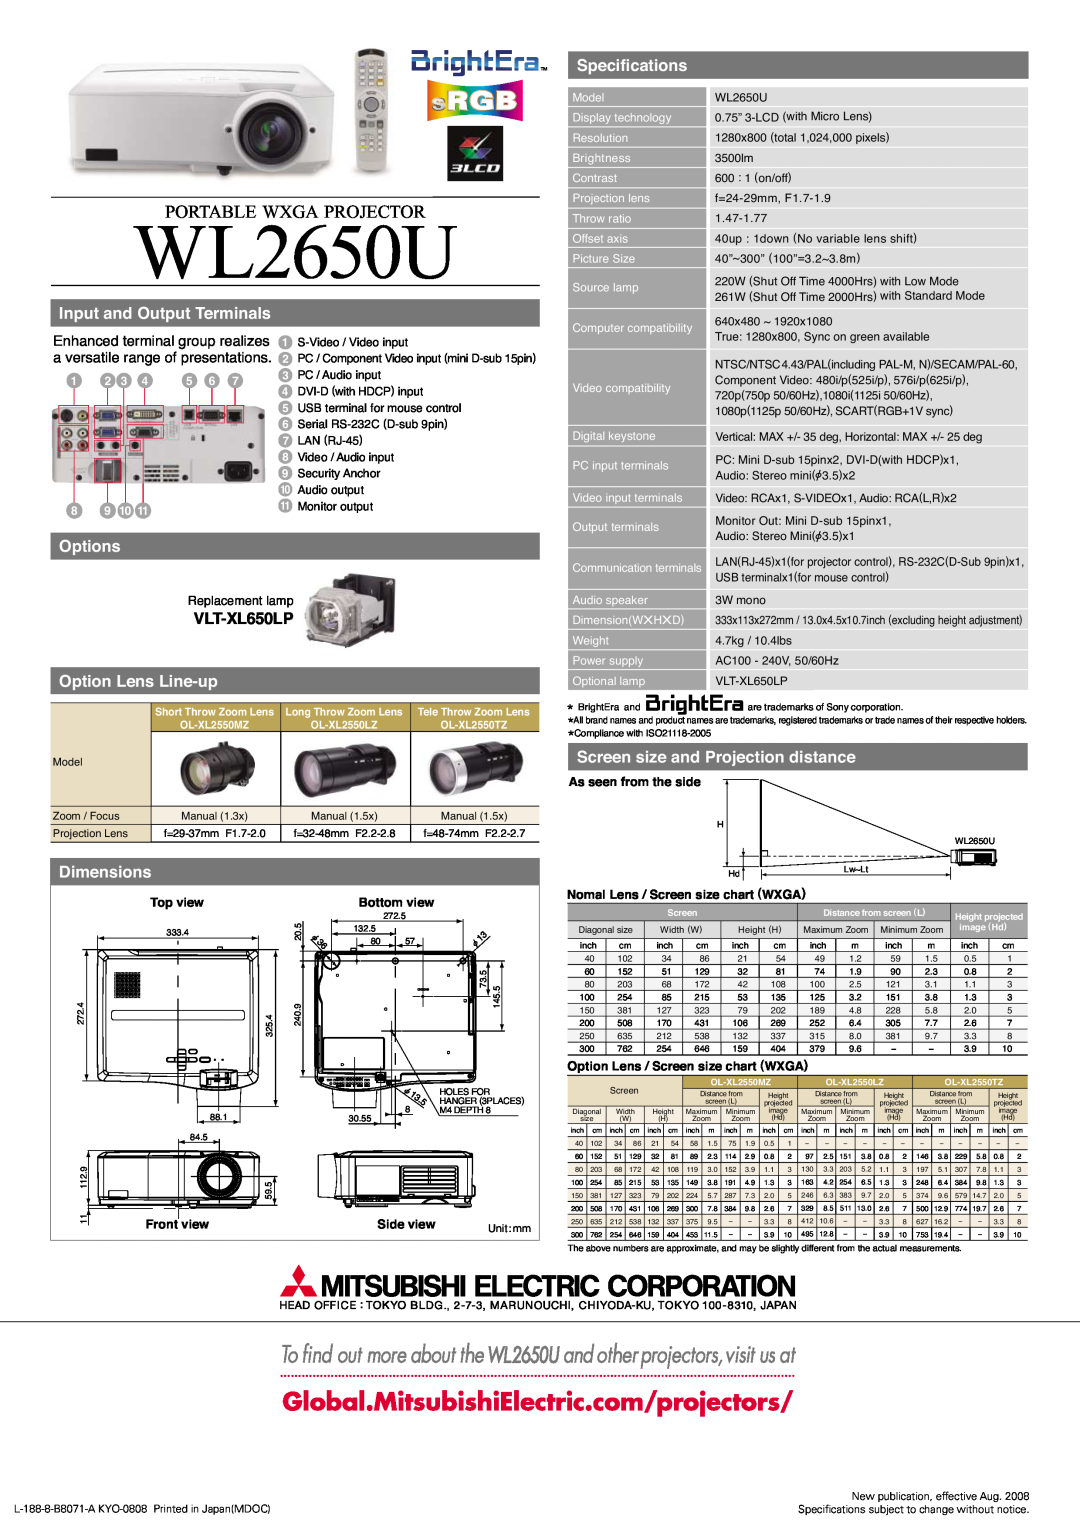 Mitsubishi Electronics WL2650U Portable Wxga Projector, Input and Output Terminals, Specifications, Options, VLT-XL650LP 